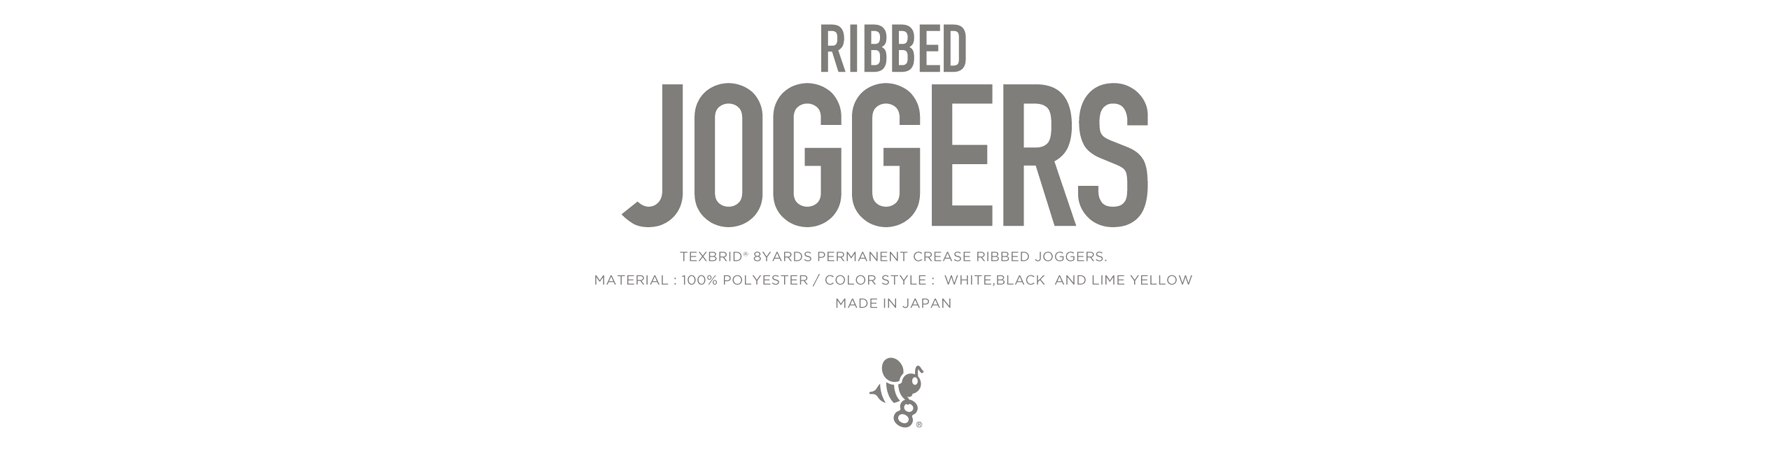 8YARDS | RIBBED JOGGERS